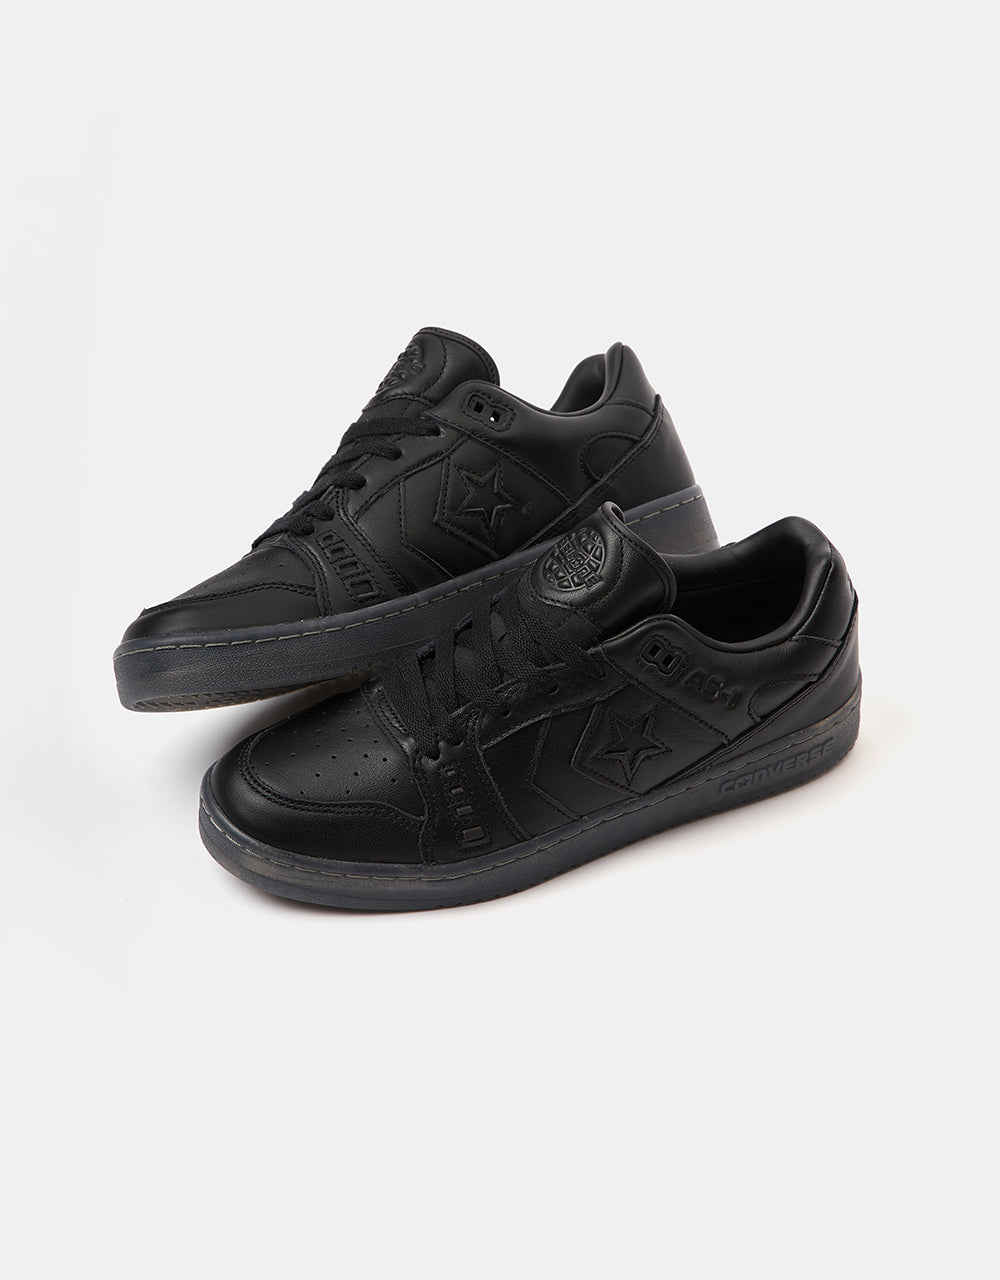 Converse AS-1 Pro Skate Shoes - Black/Black/Black